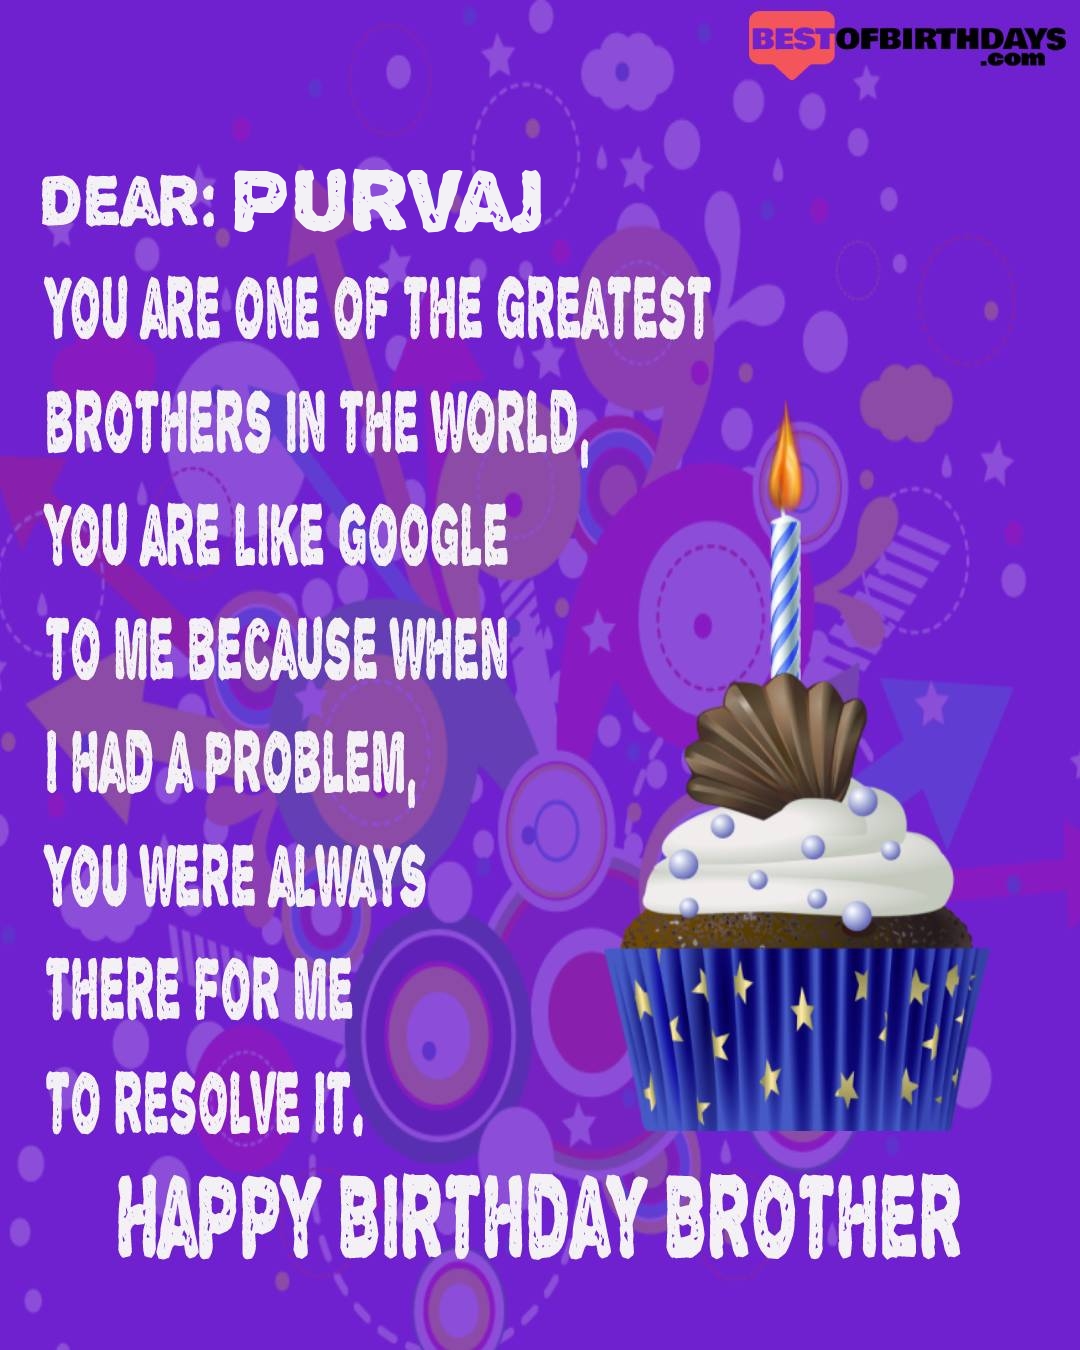 Happy birthday purvaj bhai brother bro